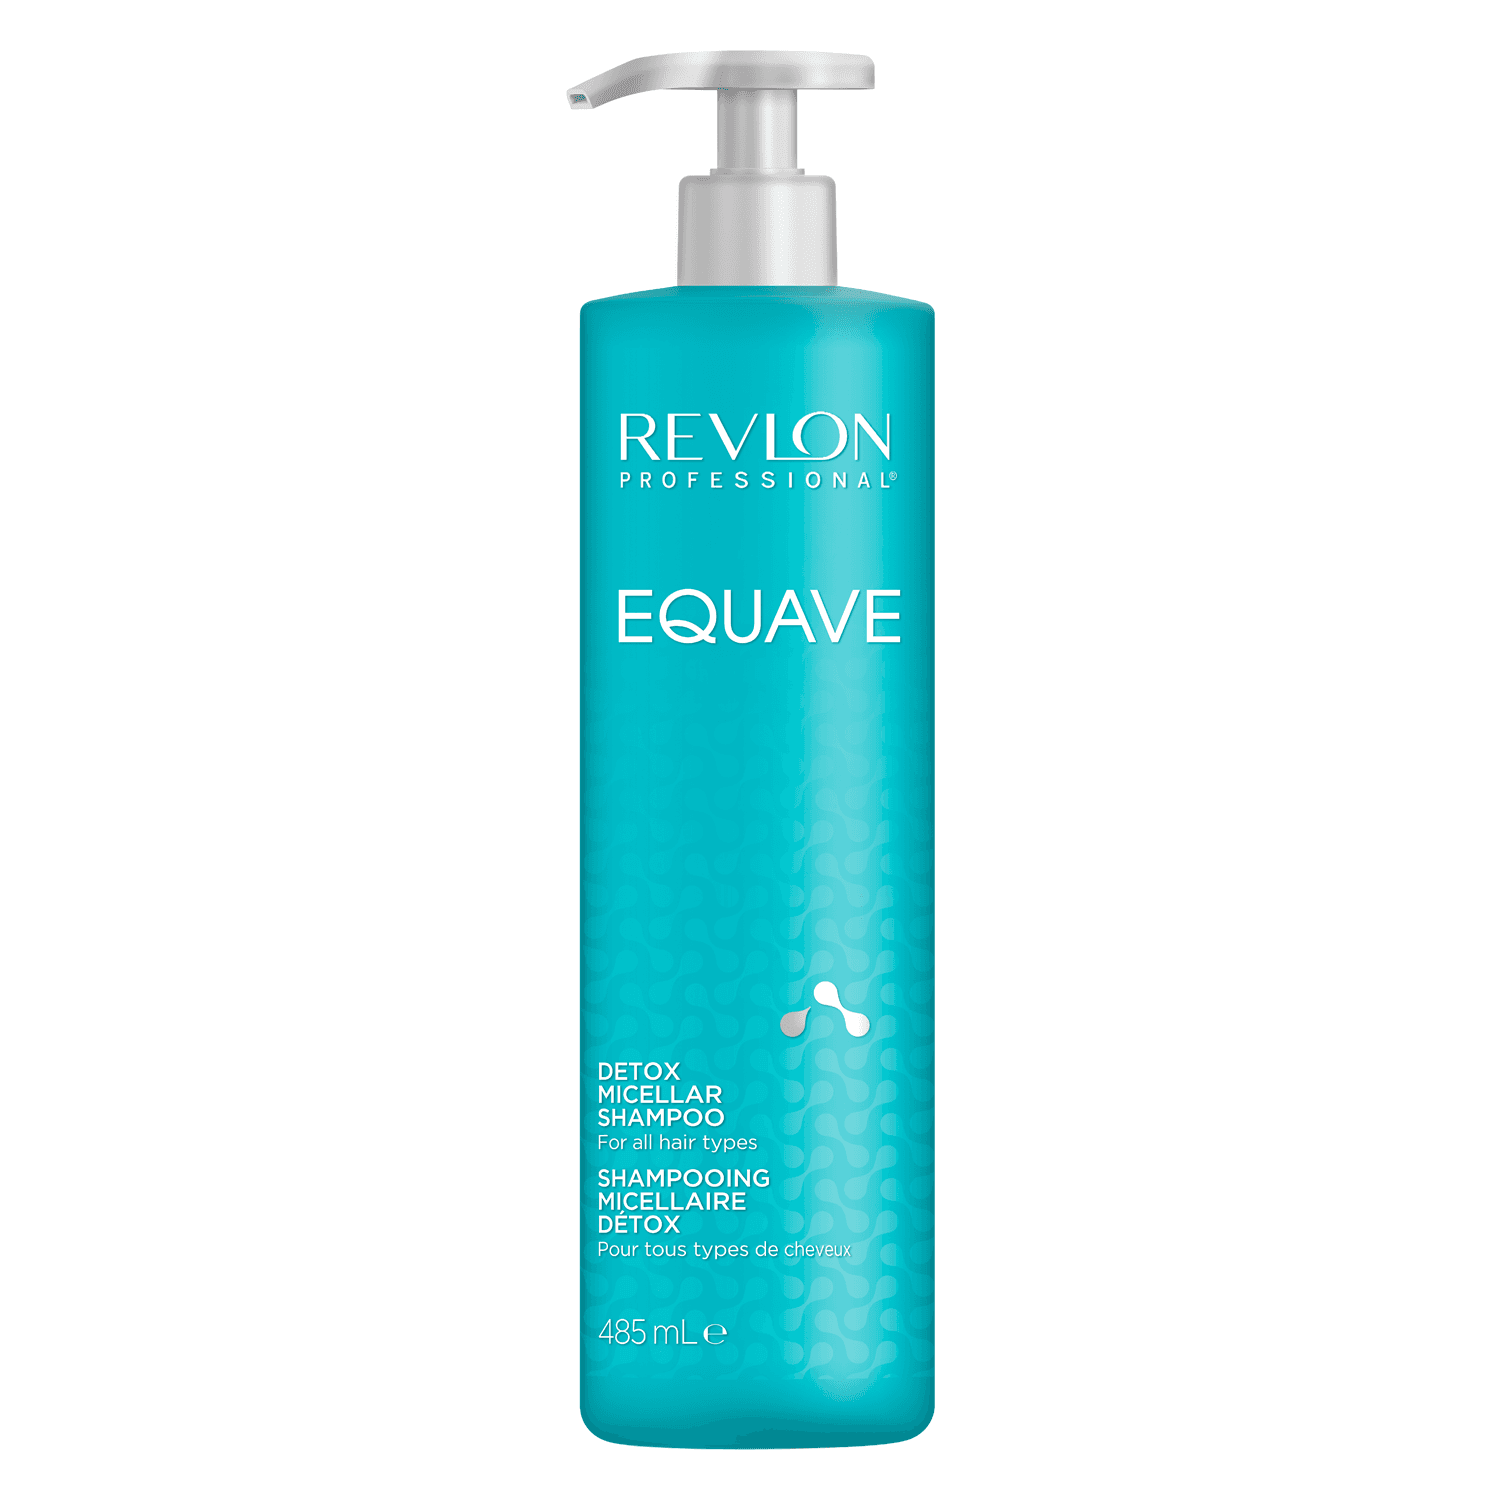 Equave - Detox Micellar Shampoo